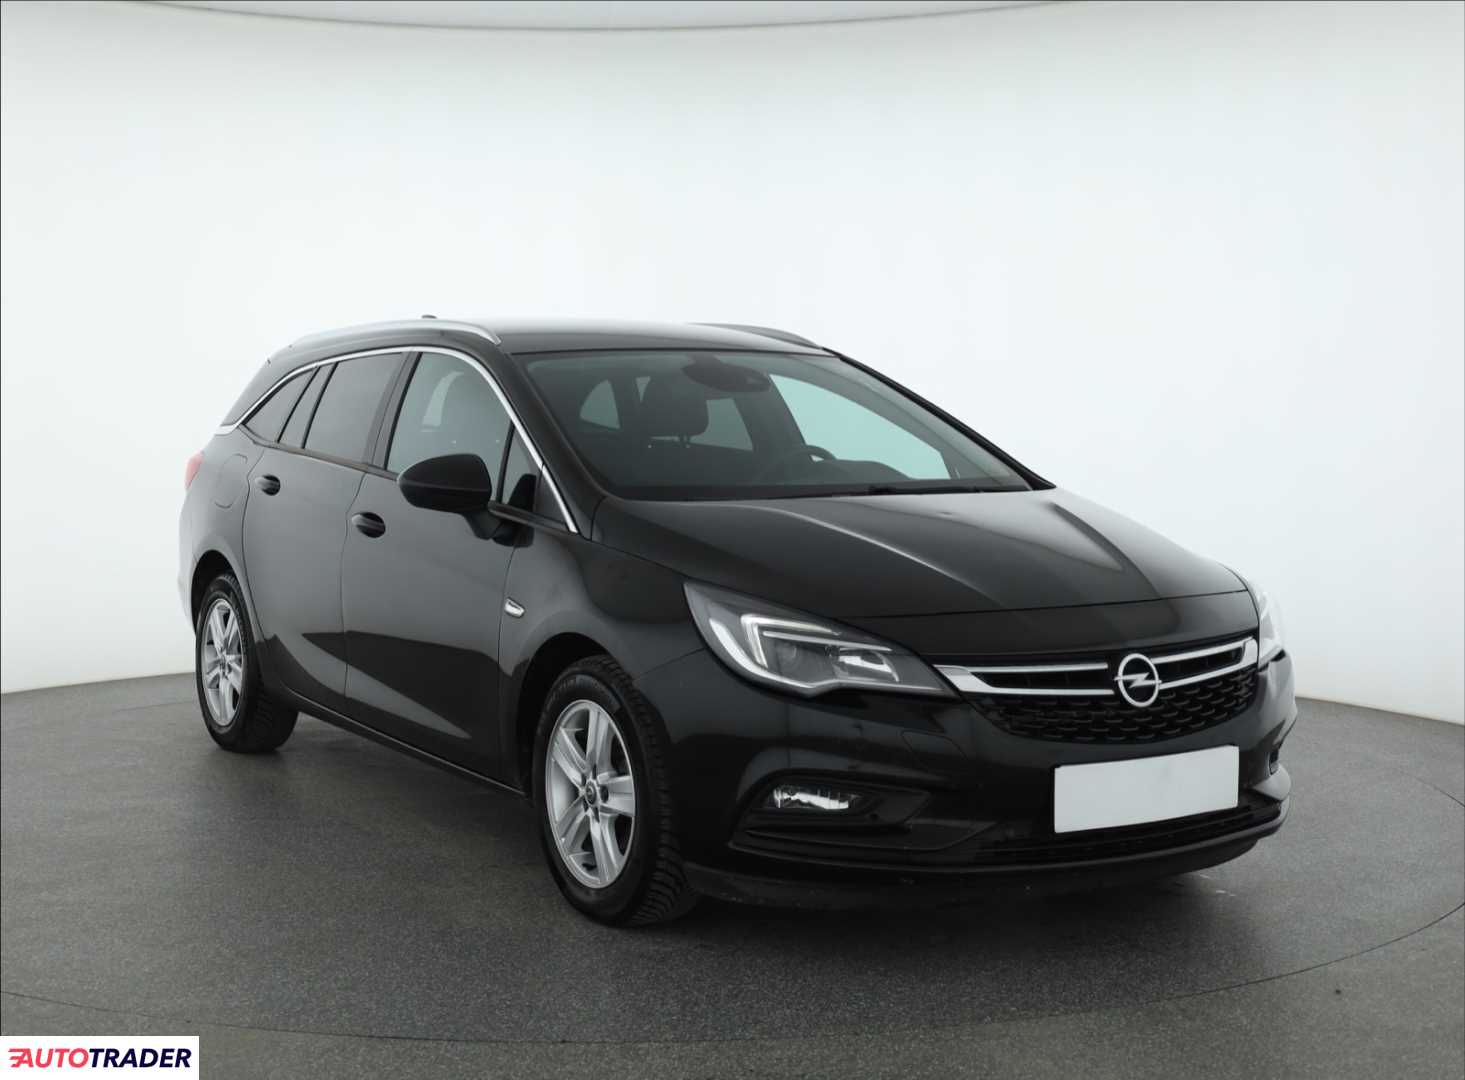 Opel Astra 2016 1.6 108 KM